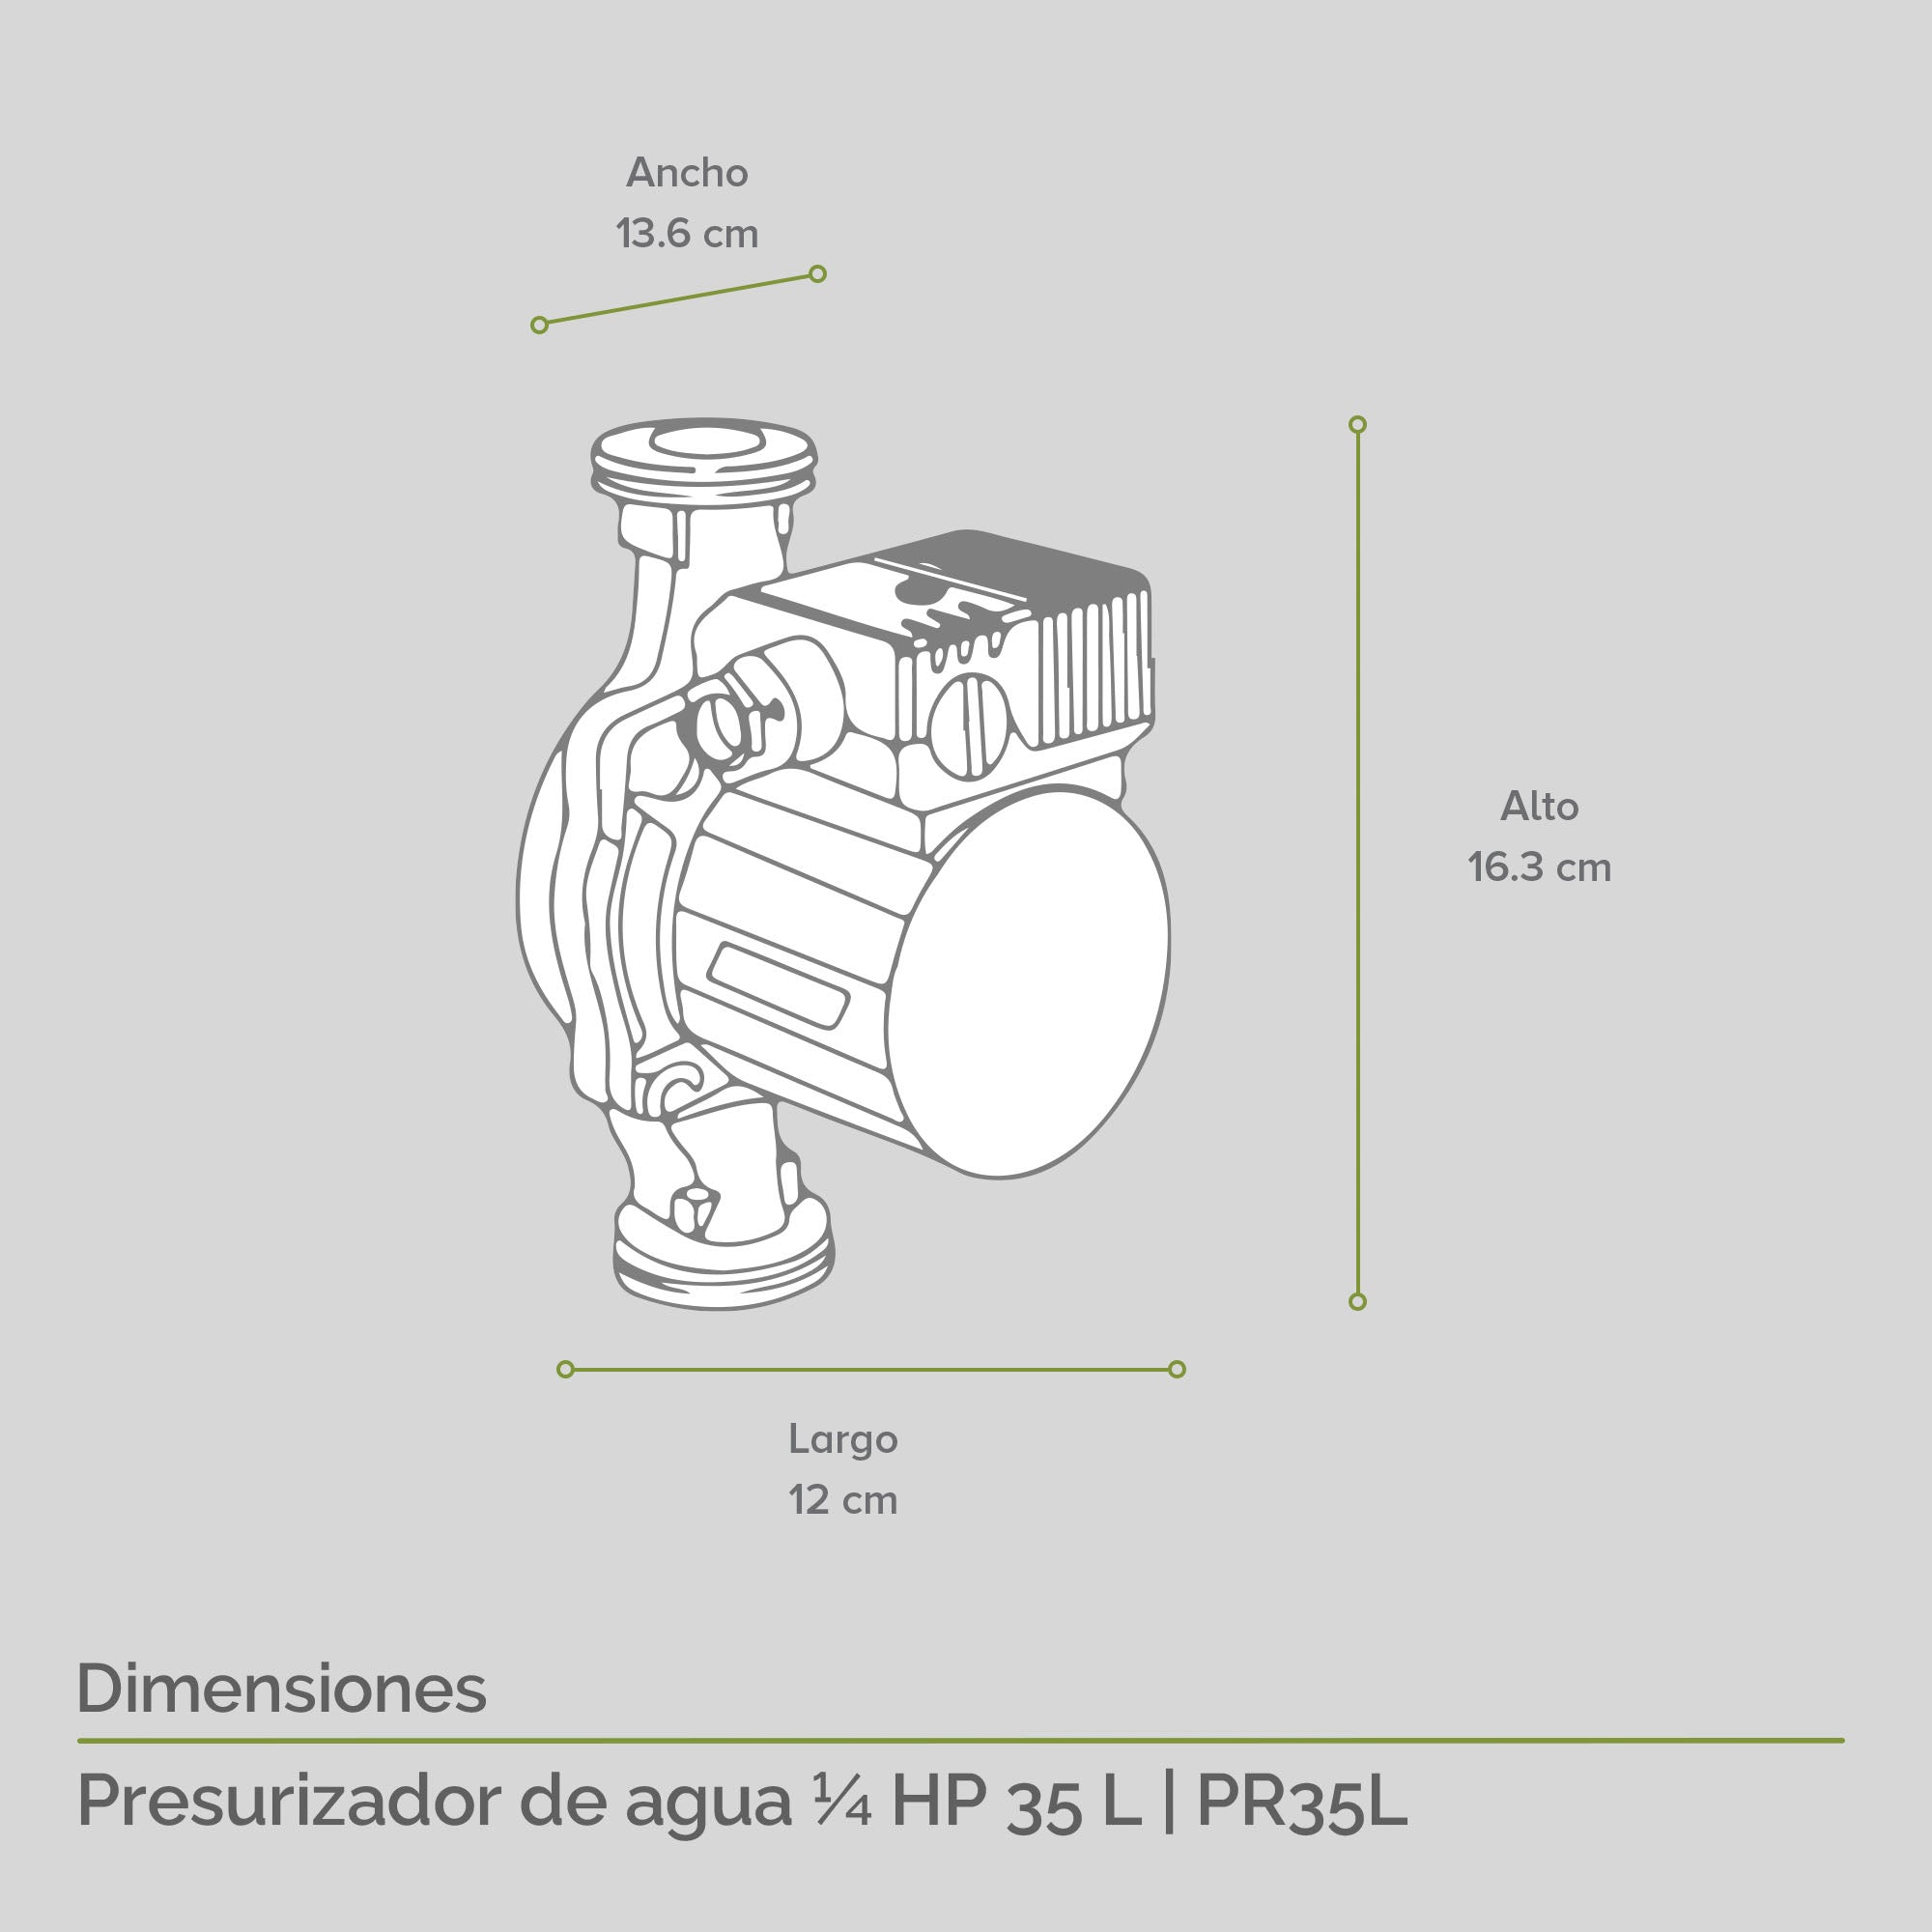 Presurizador de agua 1/4 HP Avera 35 litros